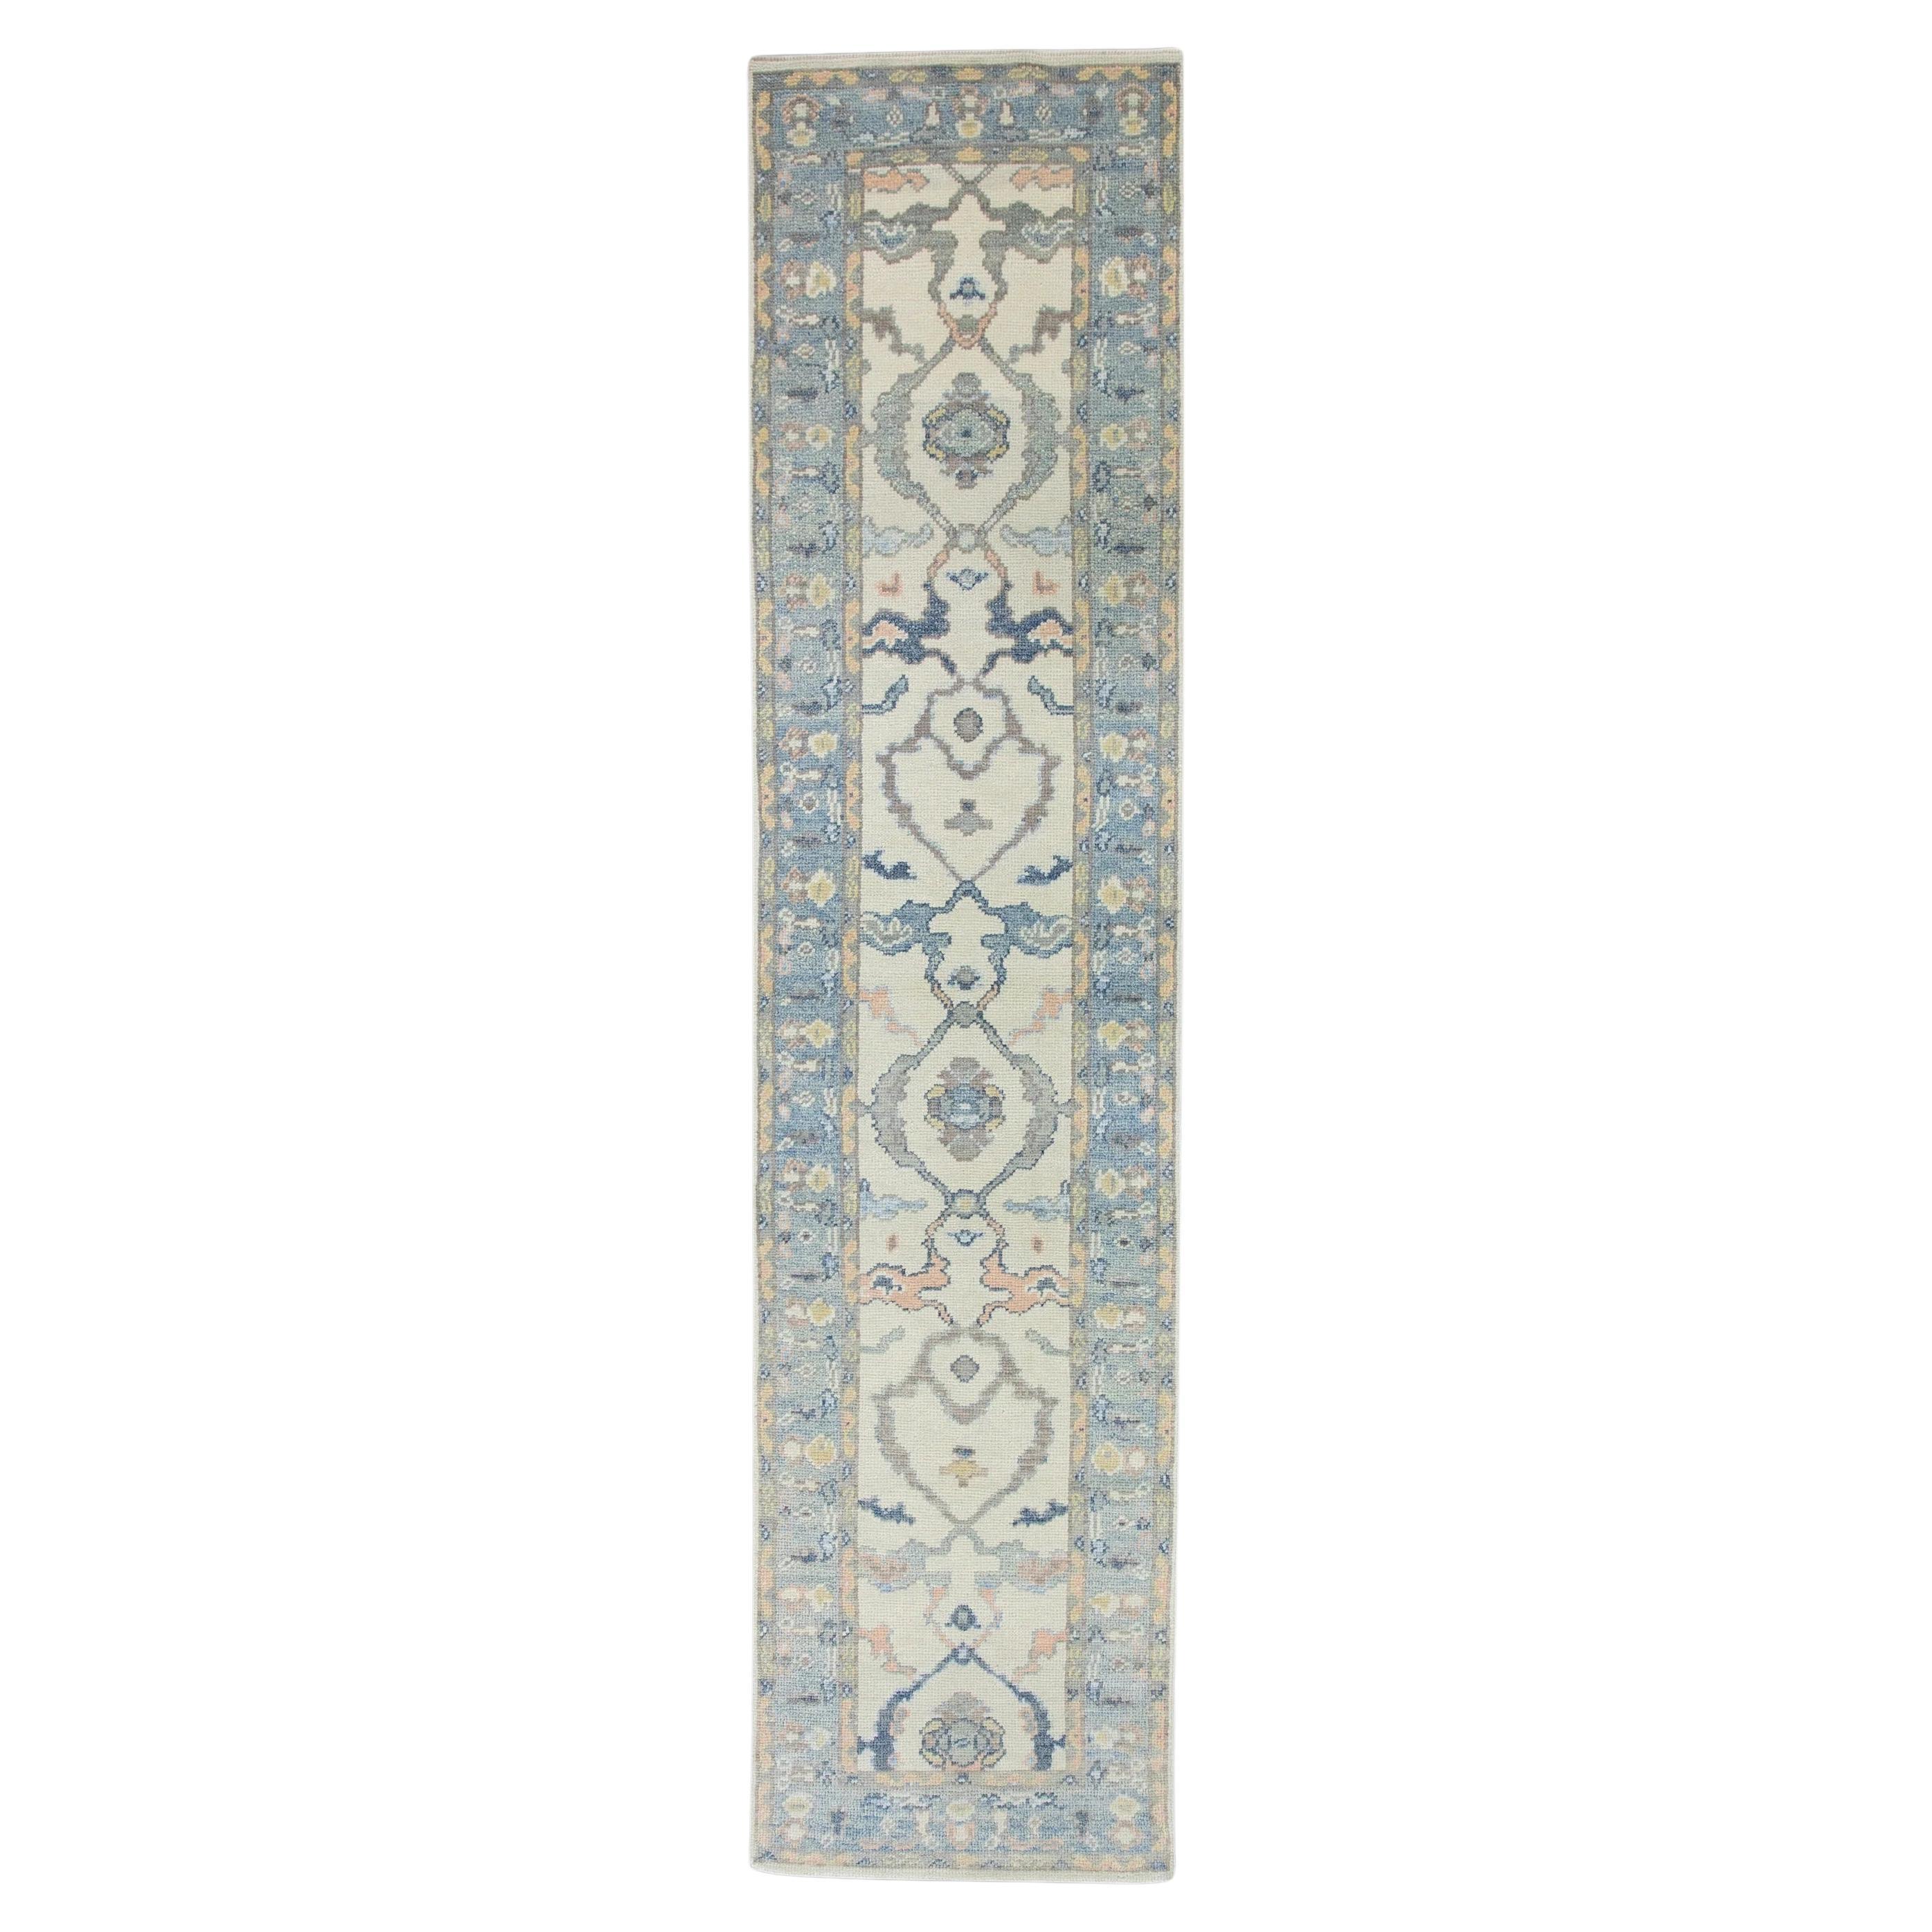 Blue Multicolor Floral Handwoven Wool Turkish Oushak Rug 2'4" x 9'10" For Sale